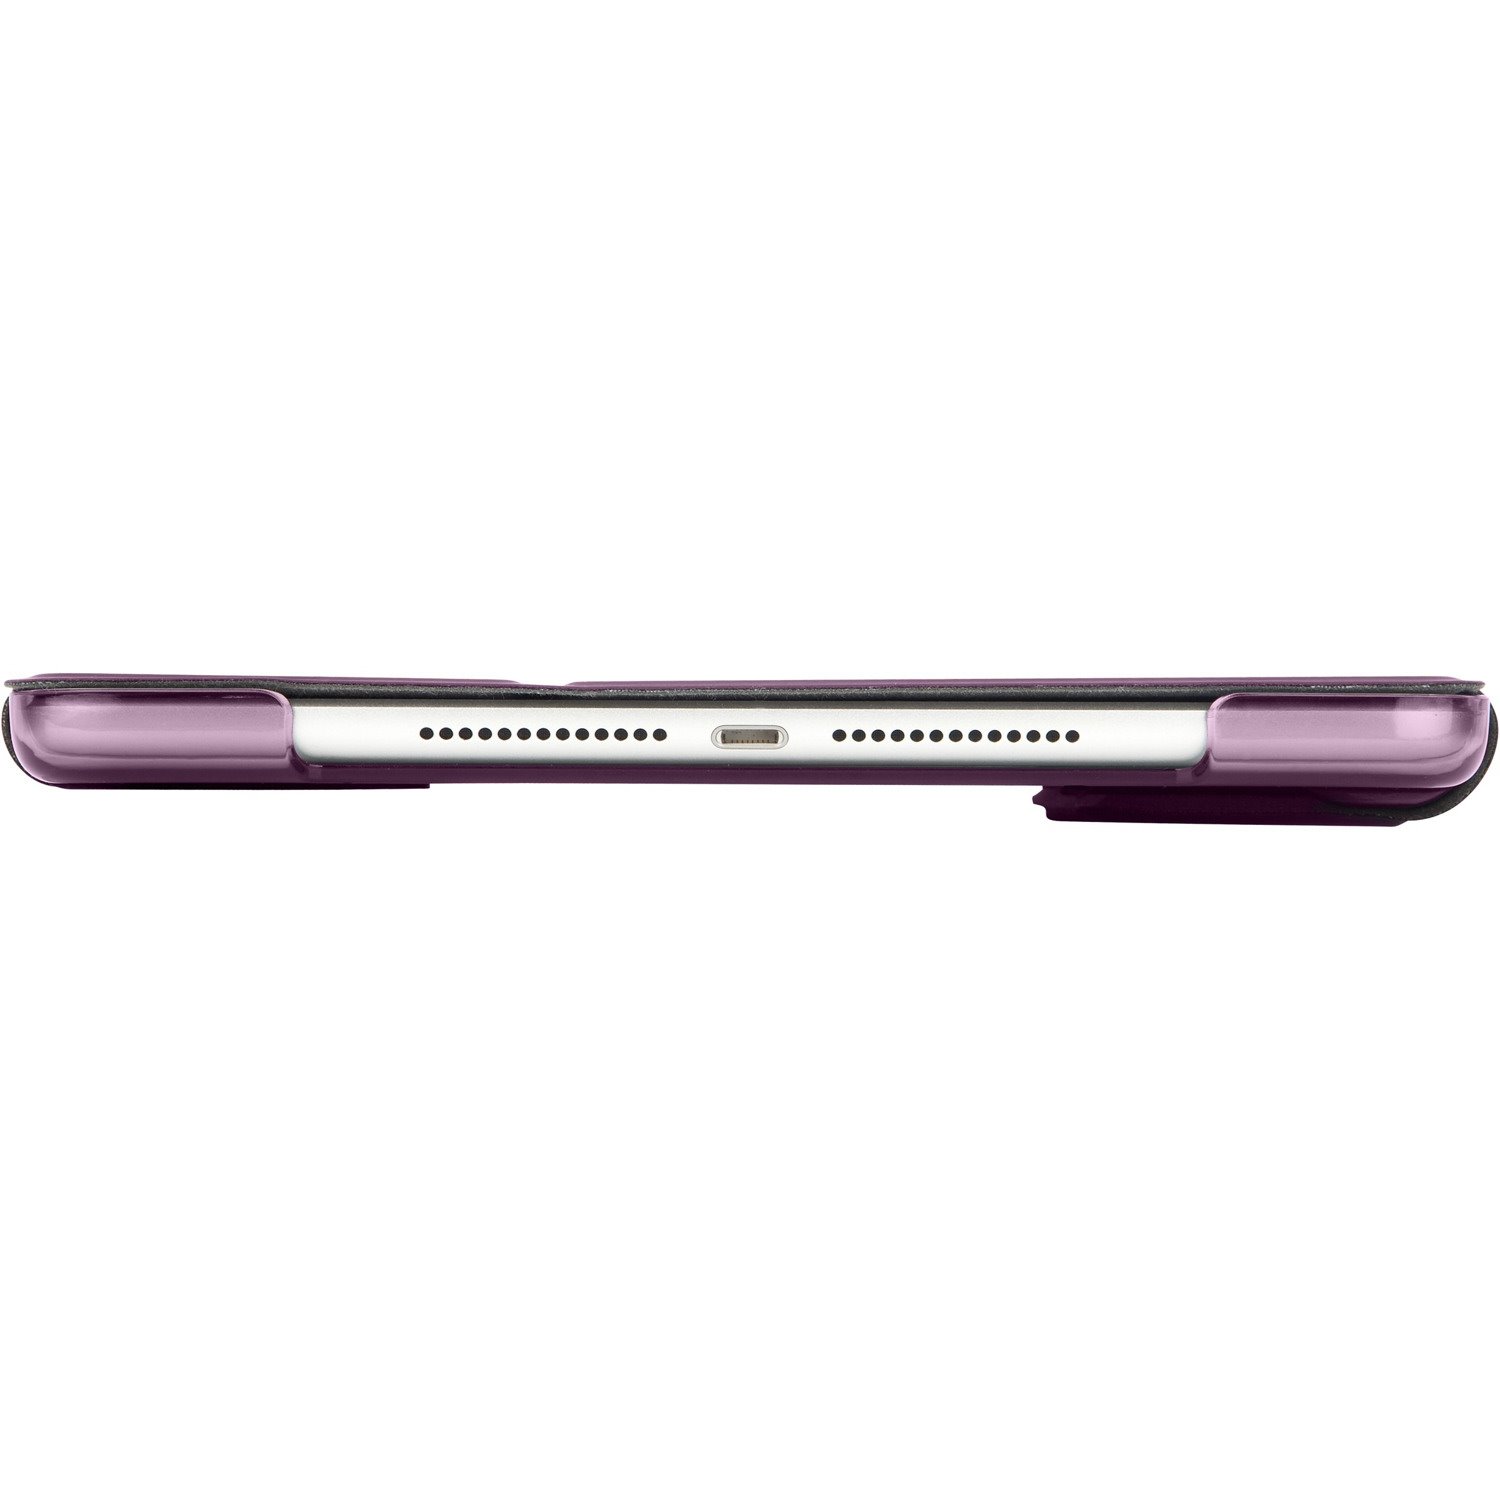 STM Goods Studio Carrying Case Apple iPad mini (5th Generation), iPad mini 4 Tablet - Dark Purple